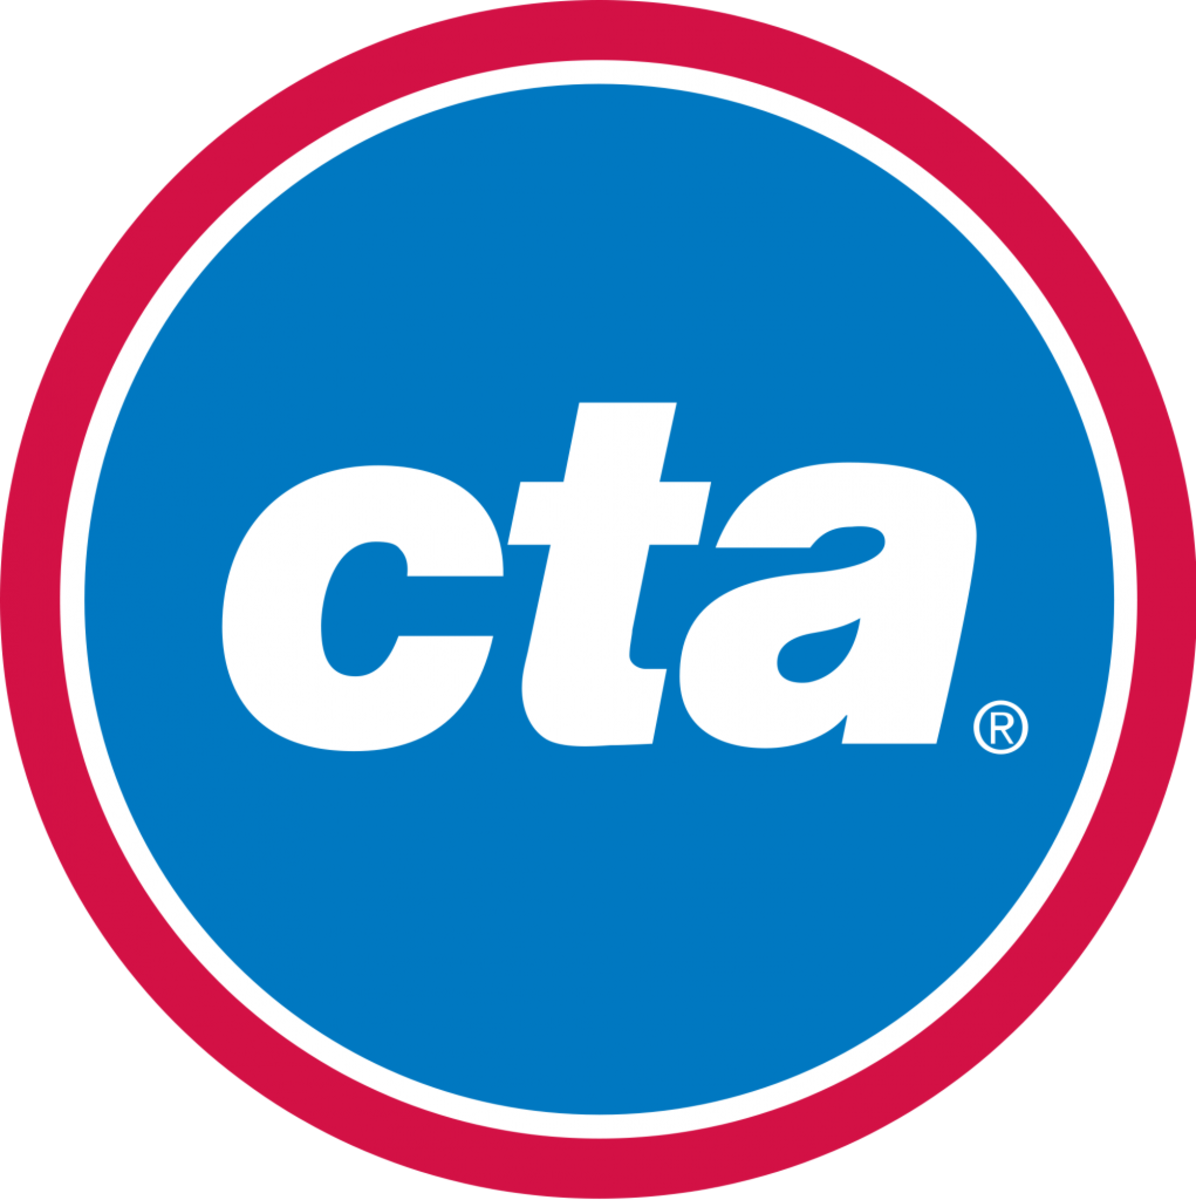 2000px-Chicago_Transit_Authority_Logo.svg